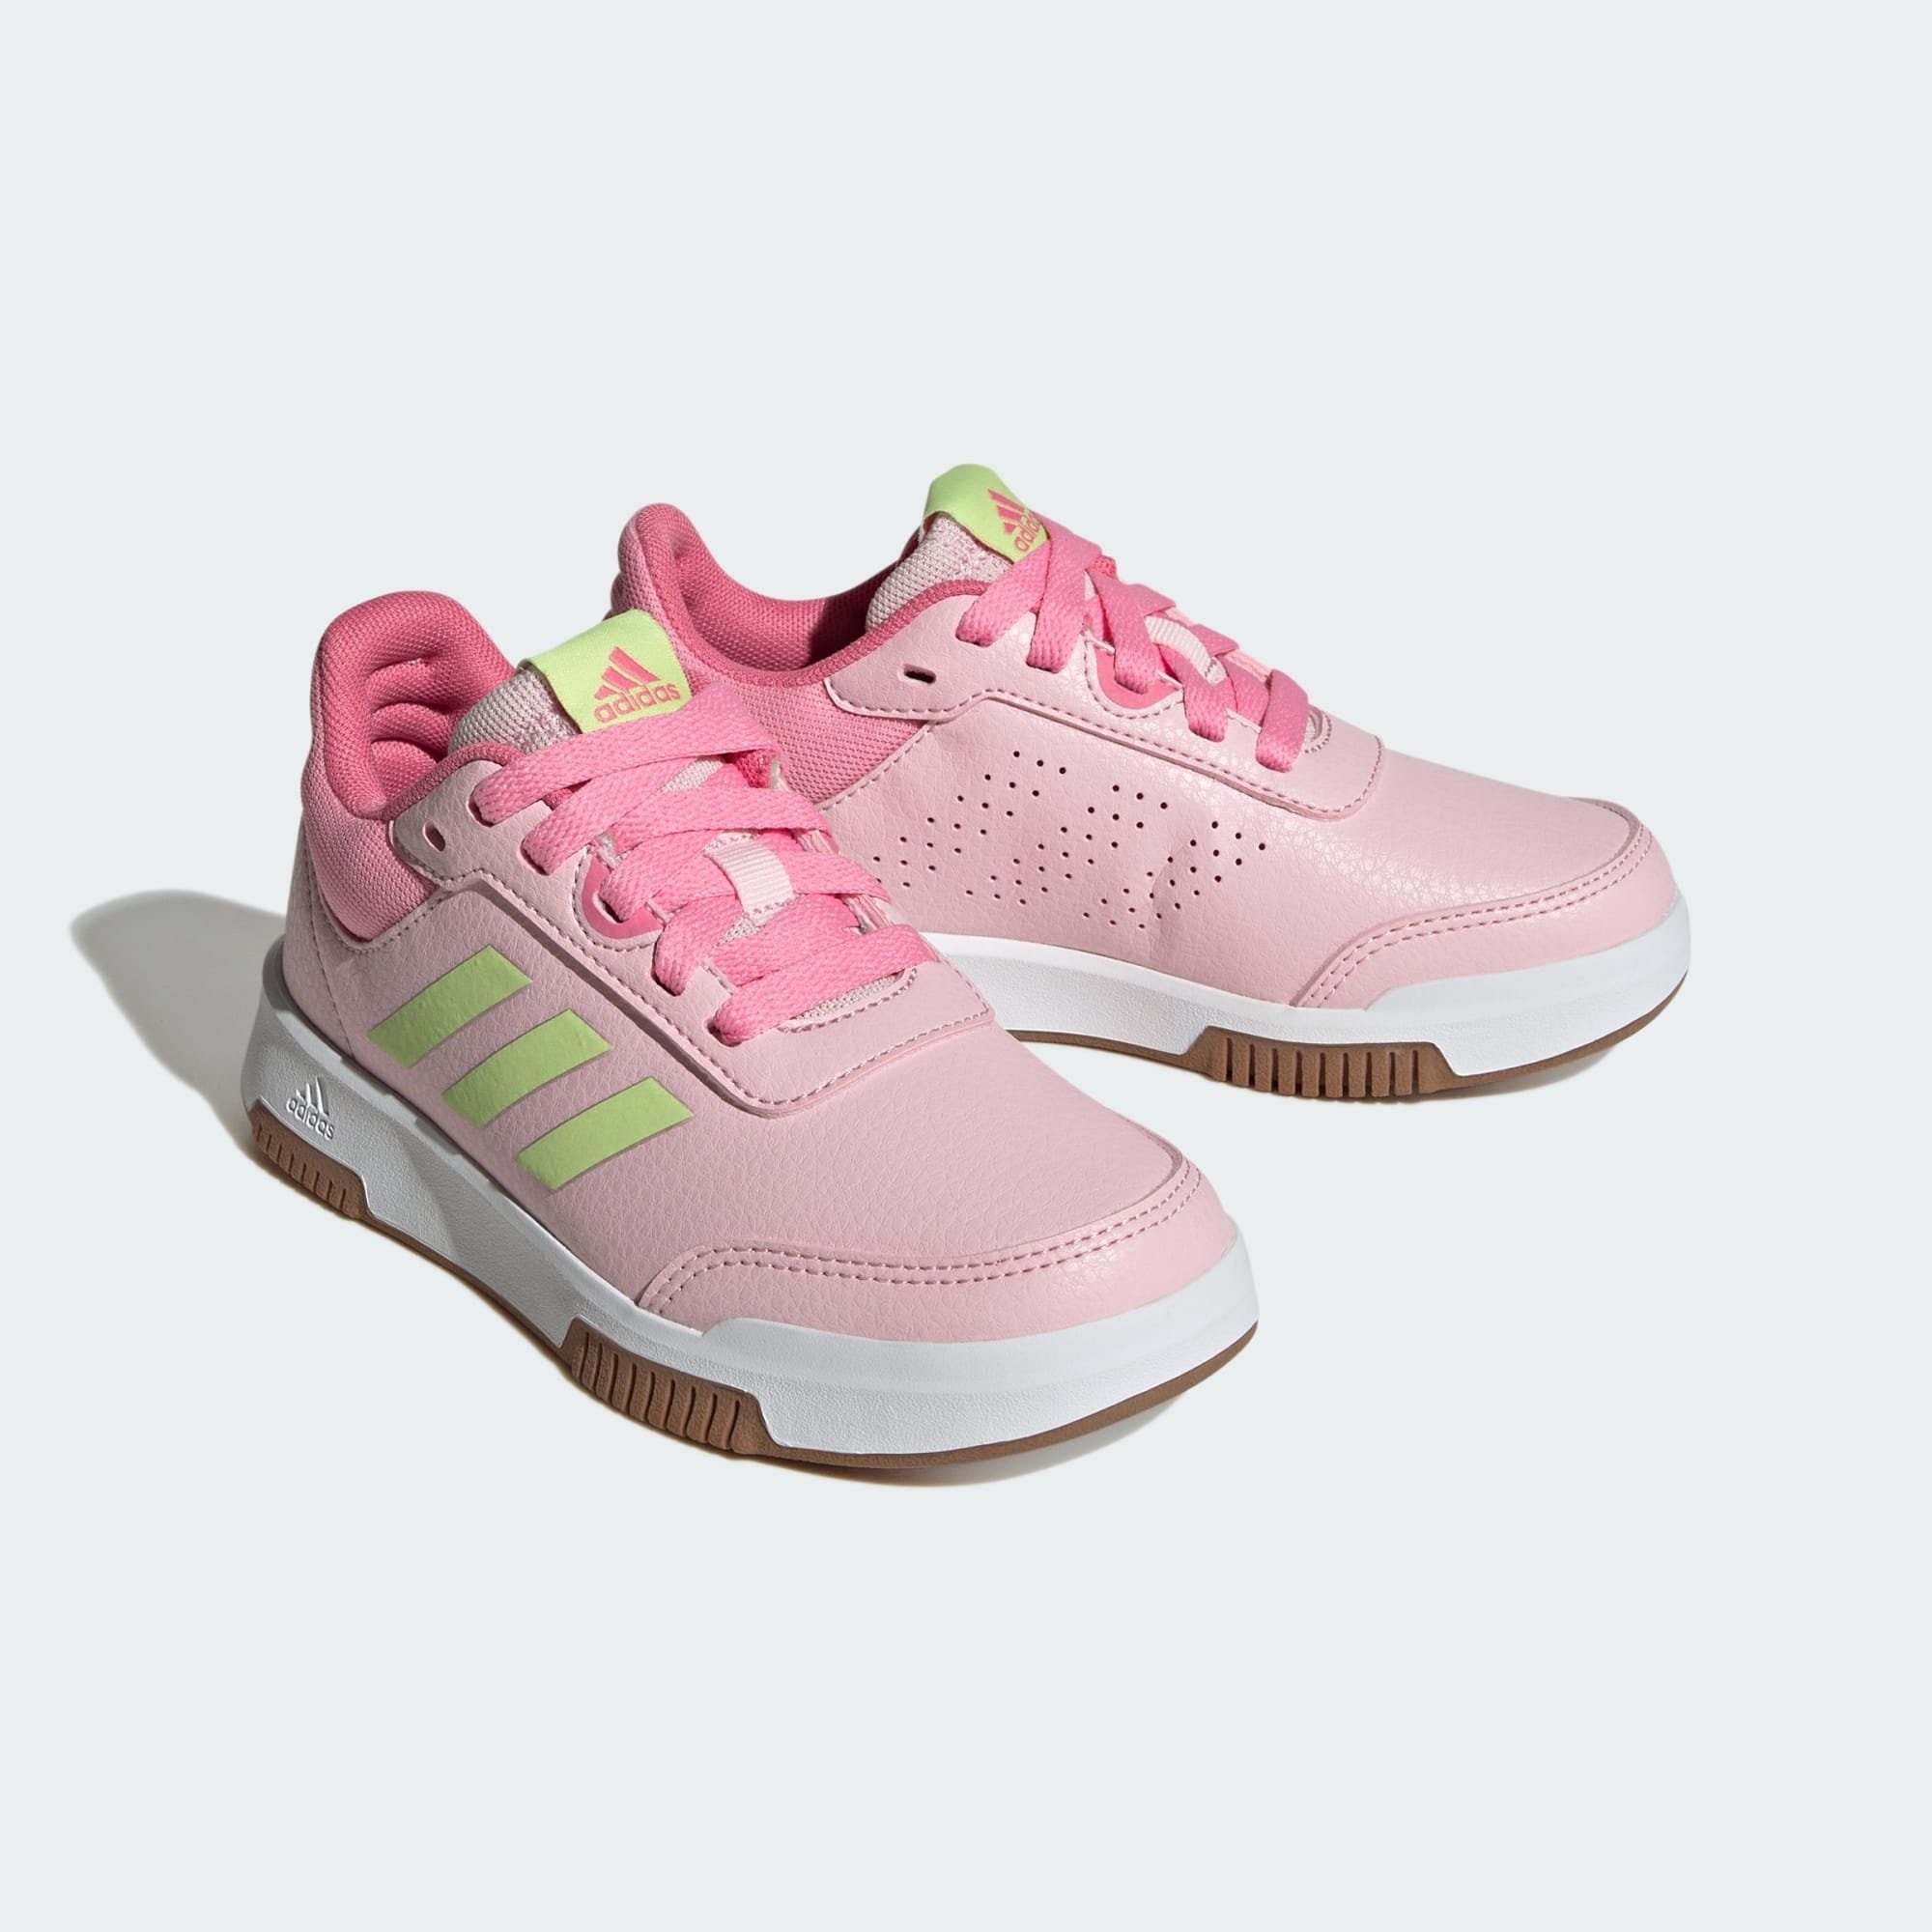 adidas Sportswear TENSAUR Bliss / SCHUH Sneaker / LACE SPORT Clear TRAINING Lime Pulse Pink Pink